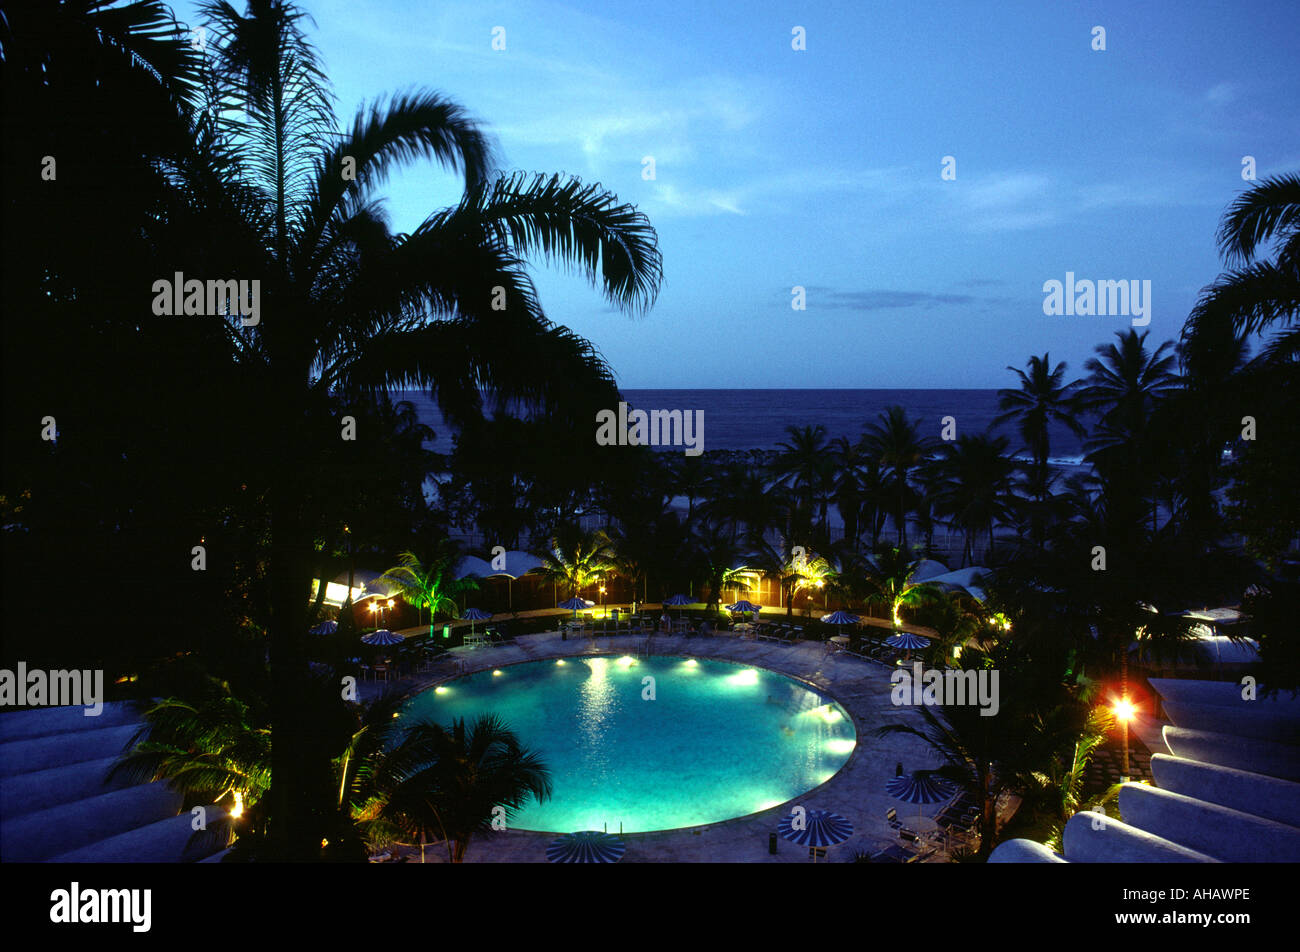 Venezuela Macuto Sheraton Hotel swimming pool at night Stock Photo